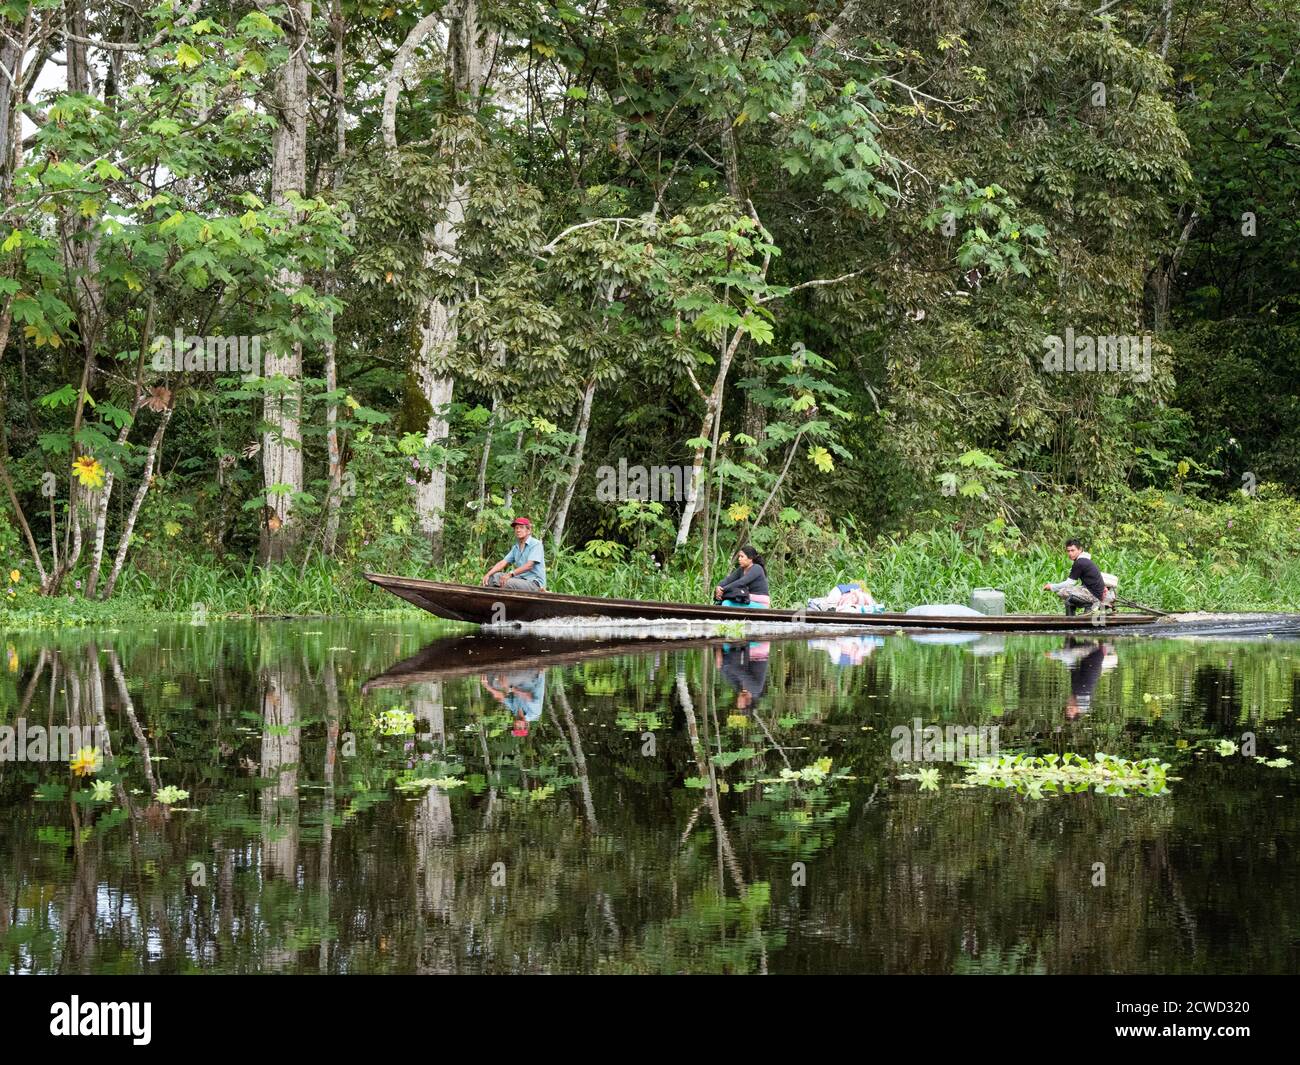 A family fishing boat on the Pacaya River, Amazon Basin, Peru. Stock Photo